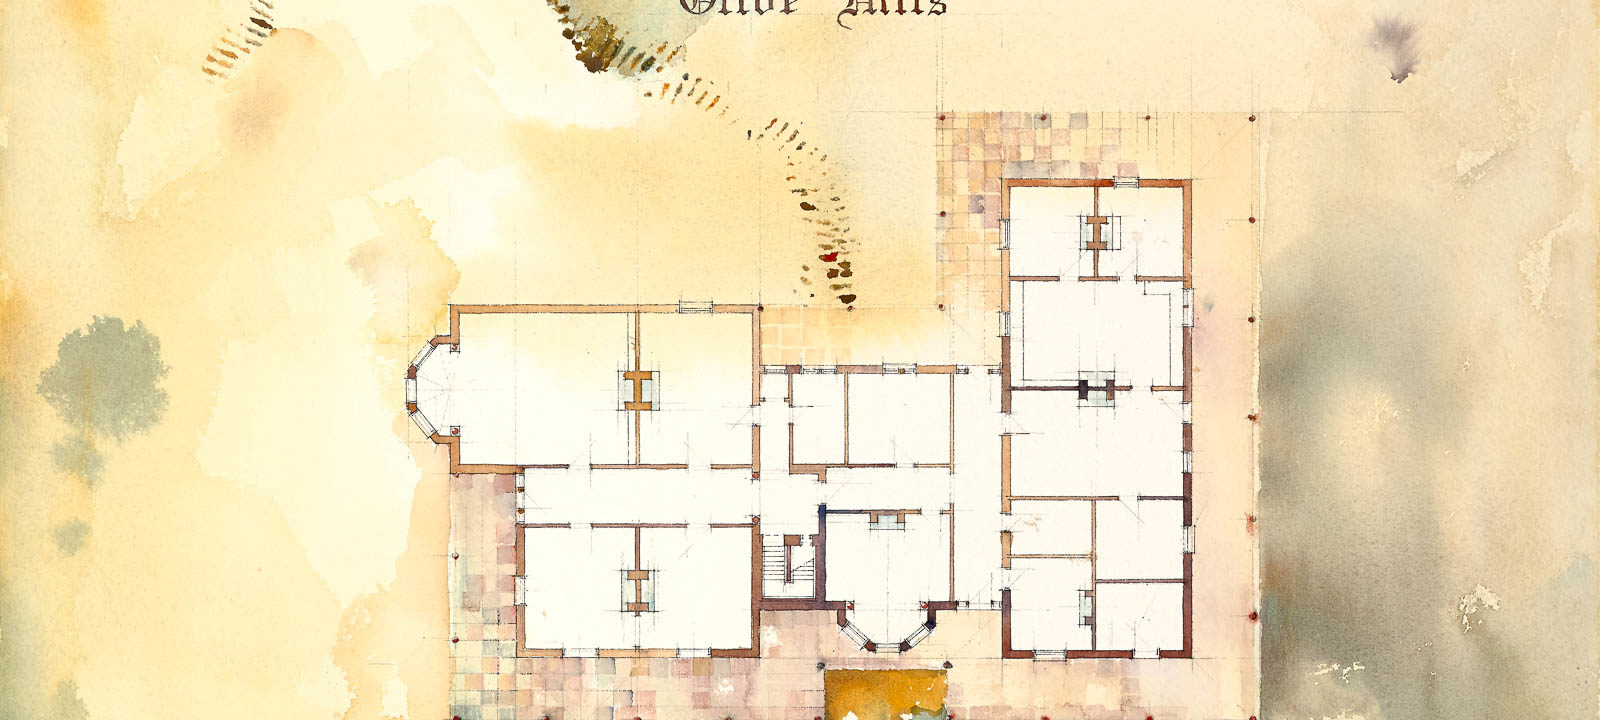 Olive Hills Estate-floor plan-Rutherglen-Victoria-chris-wilmar-architect-for-wilmar-schutz